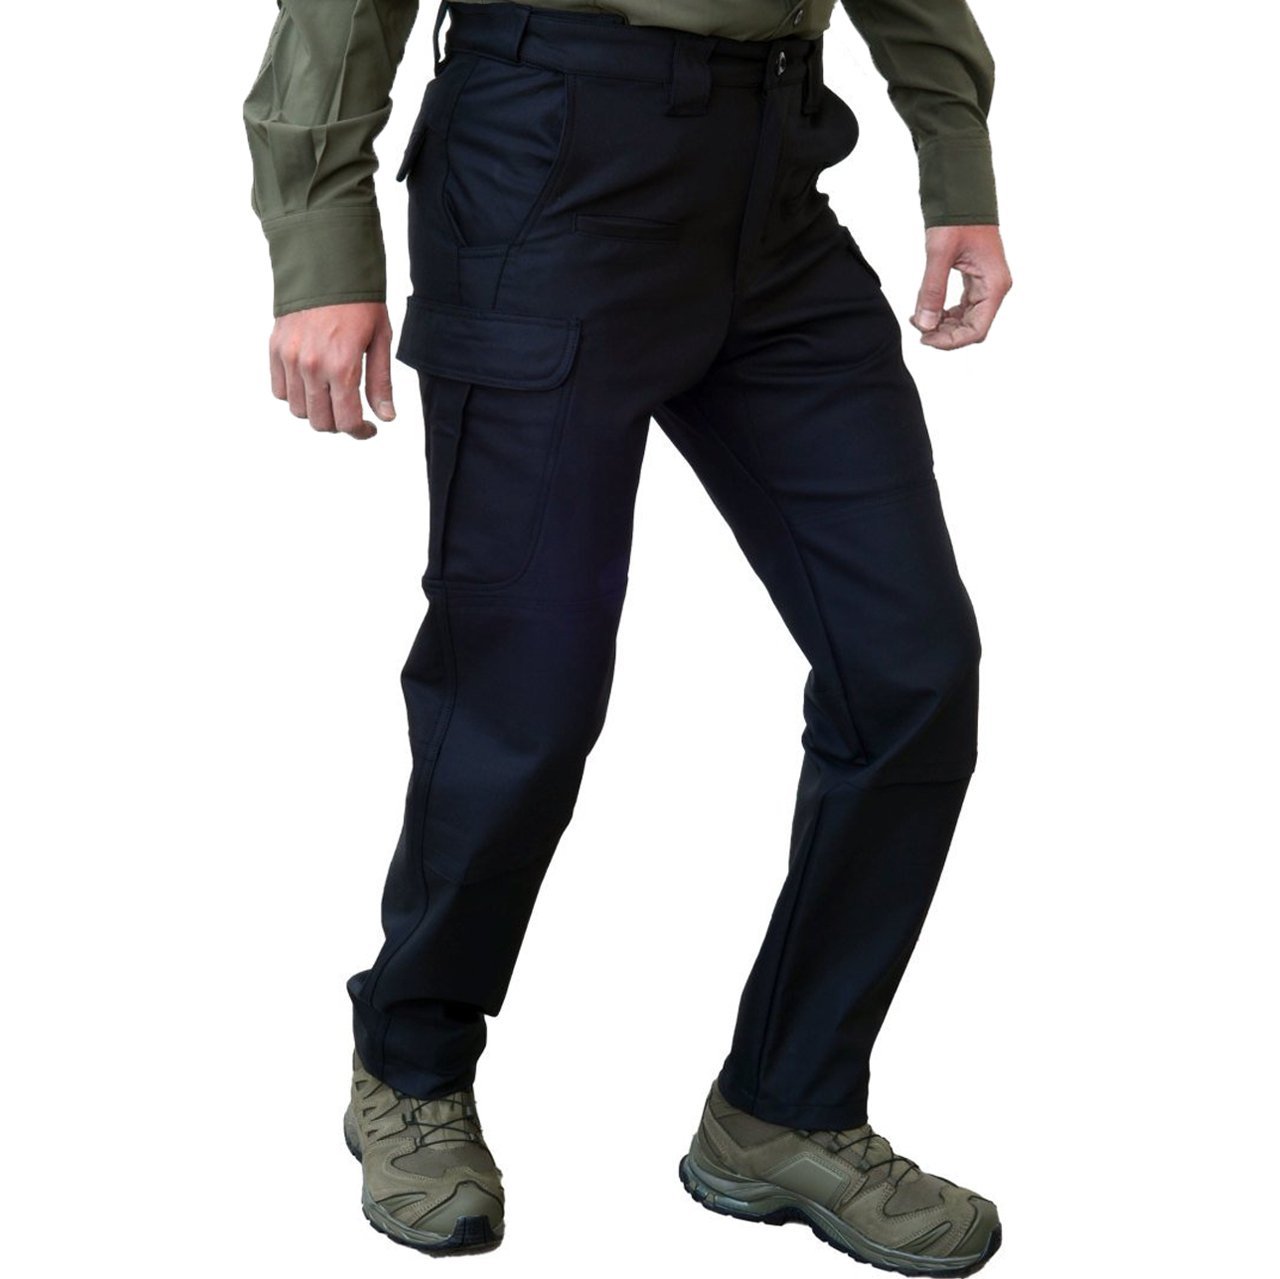 Bushlove Tactical Forces Flex Taktik Outdoor Pantolon Siyah